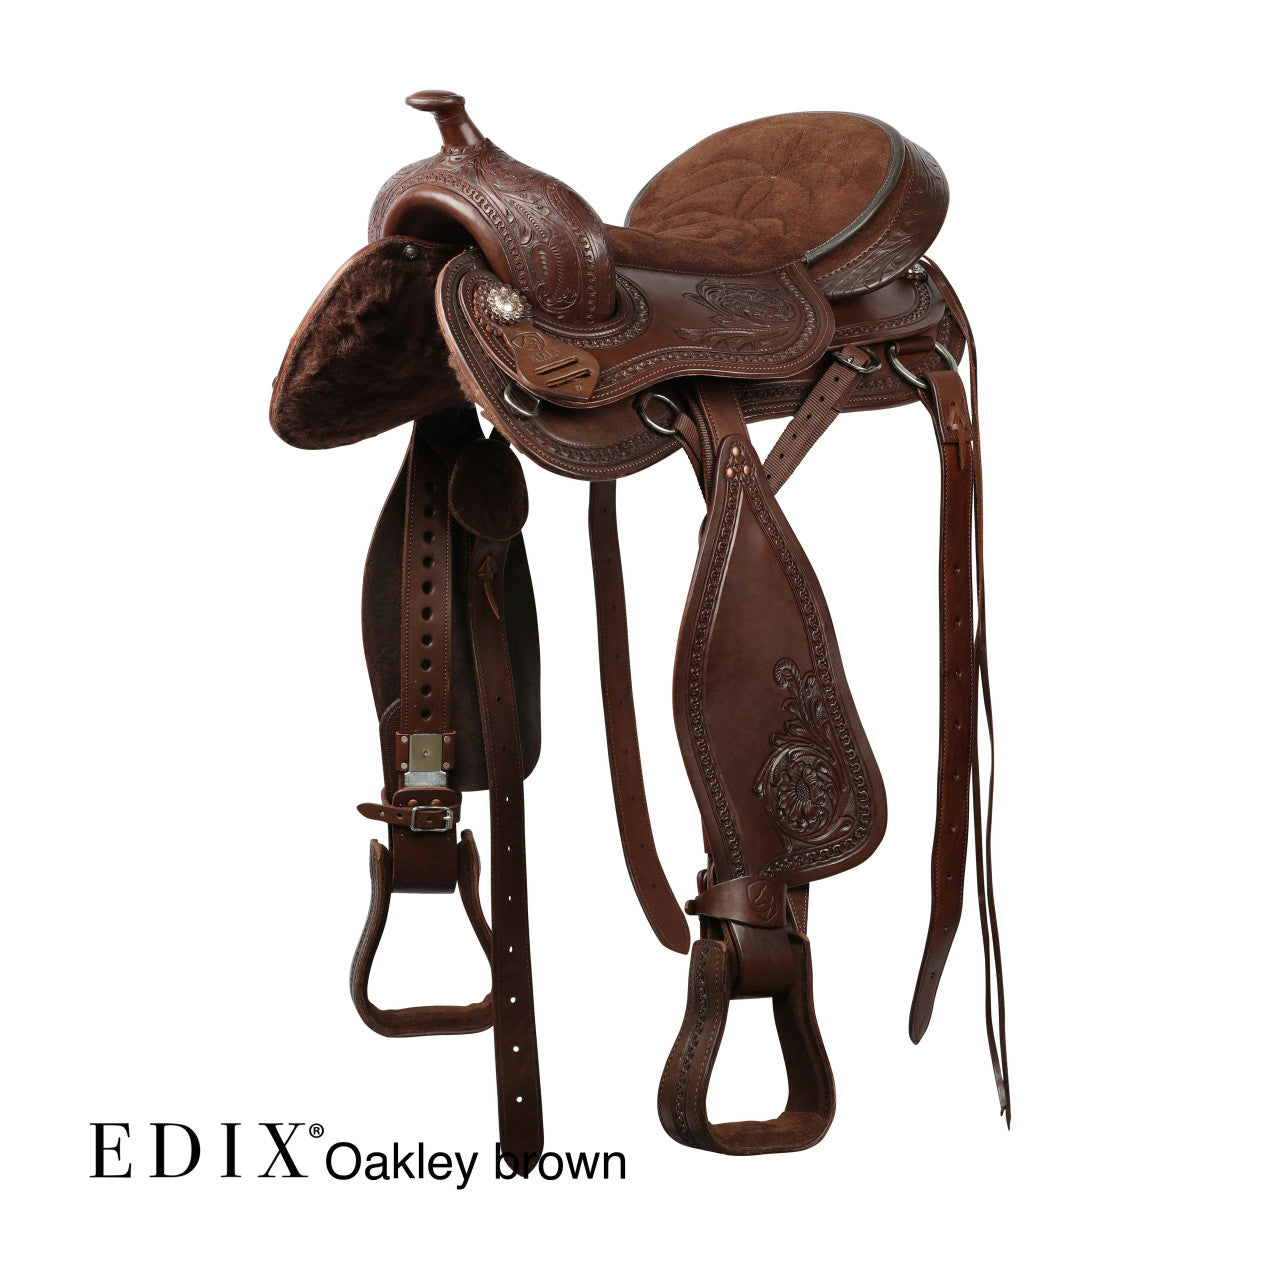 15" EDIX Oakley Treeless Western Saddle